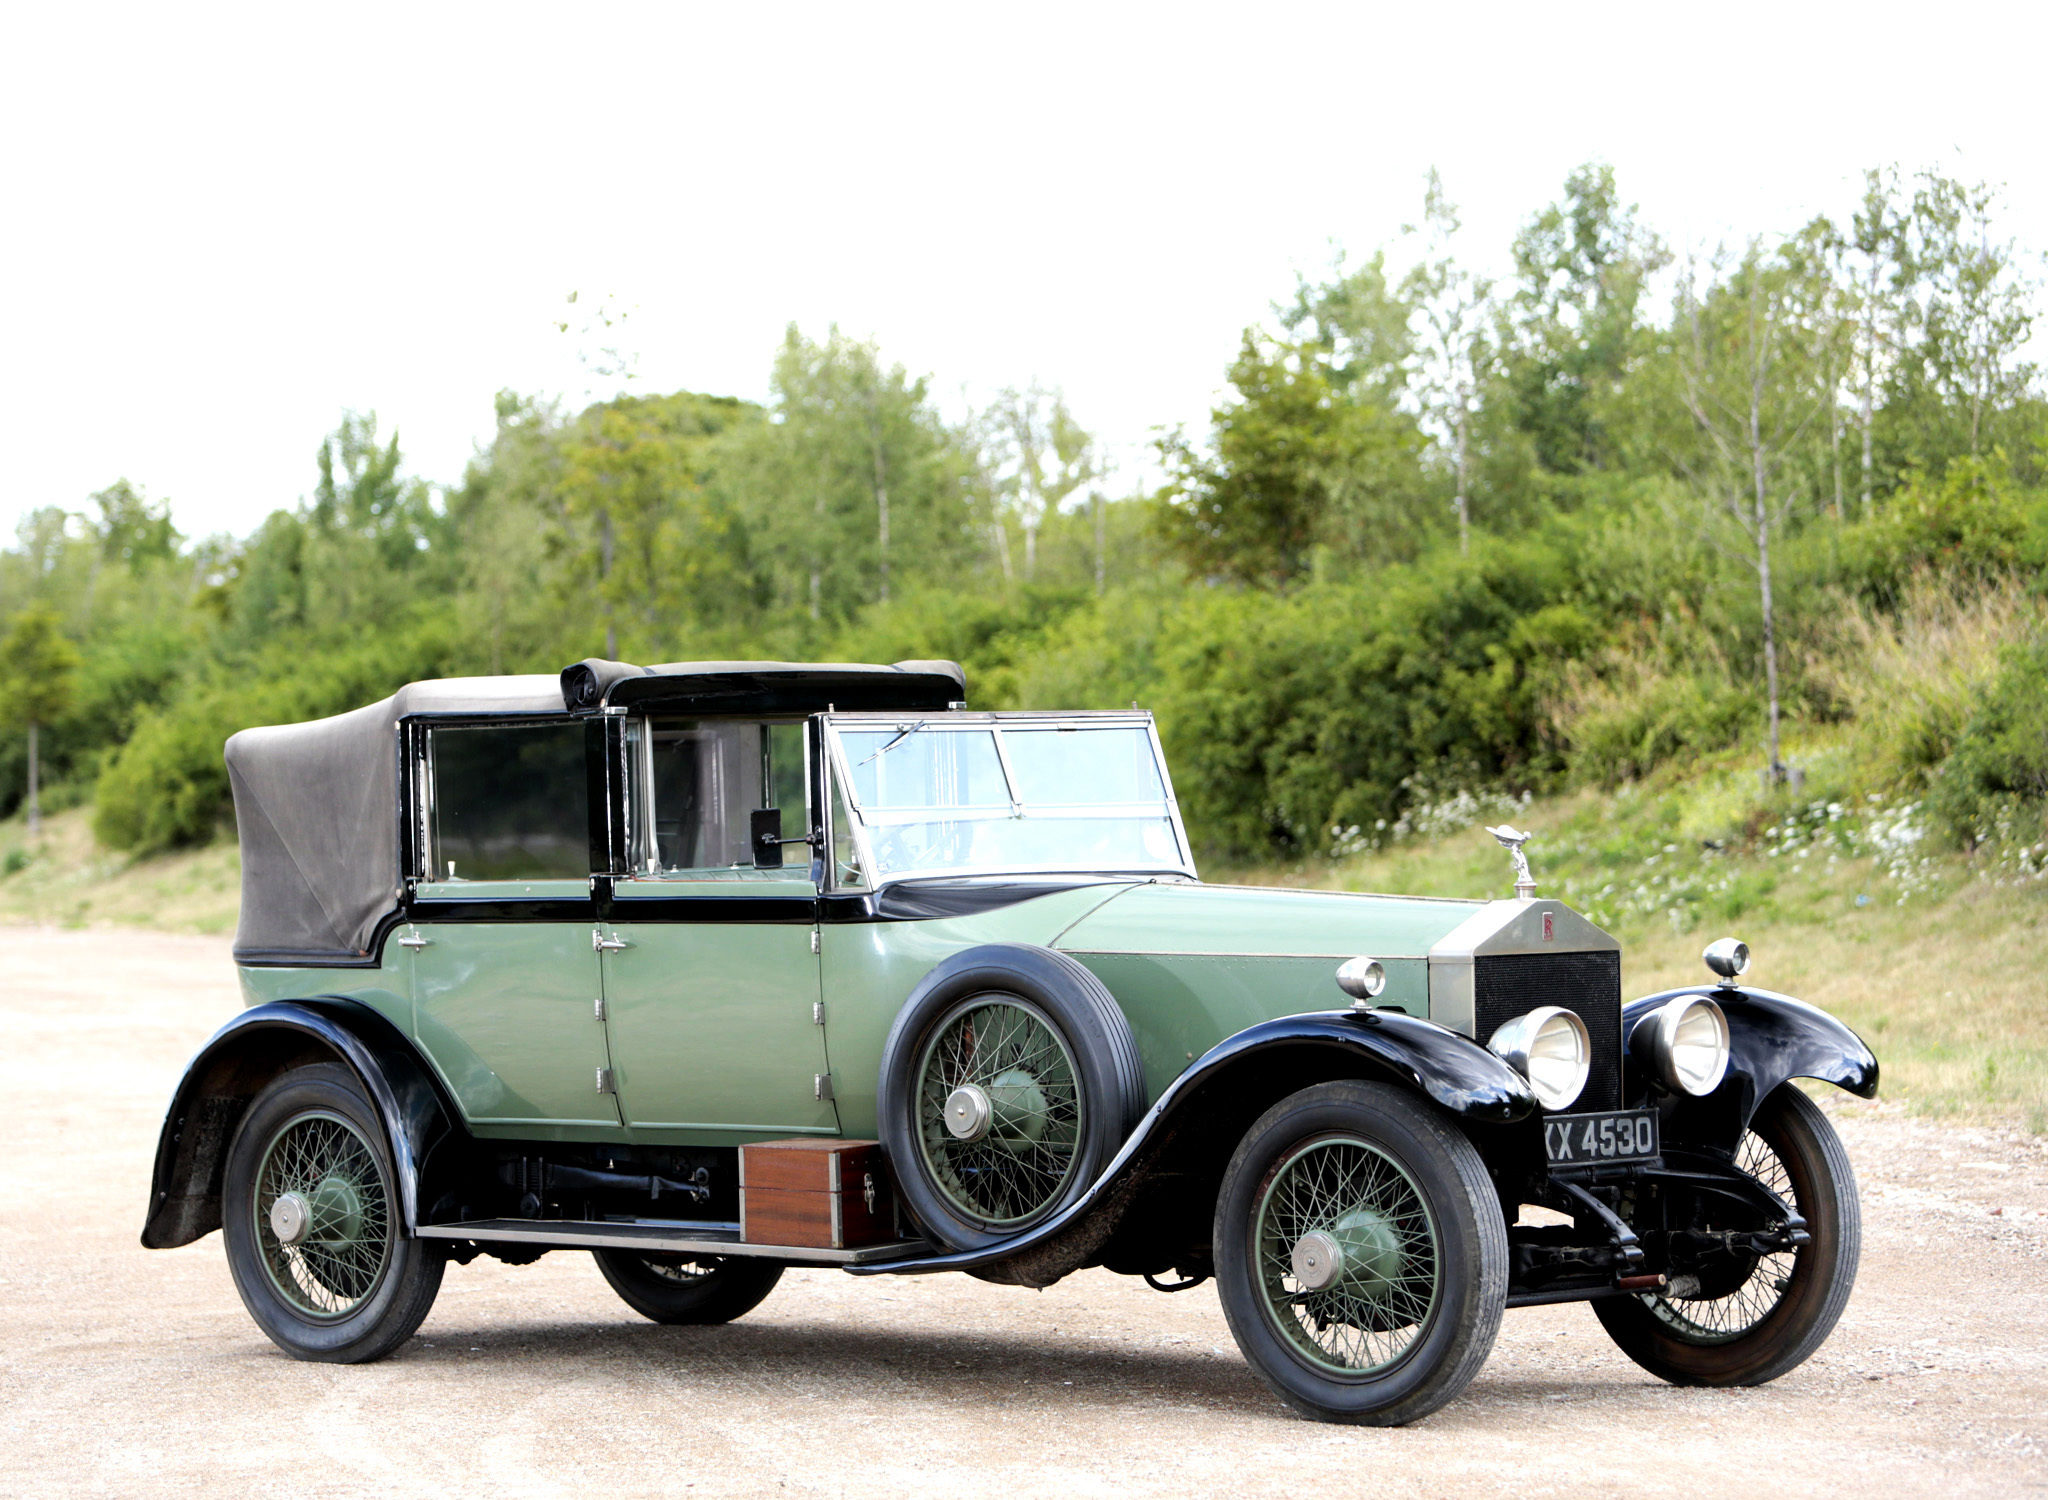 1924 Rolls-Royce Silver Ghost 40/50 Cabriolet